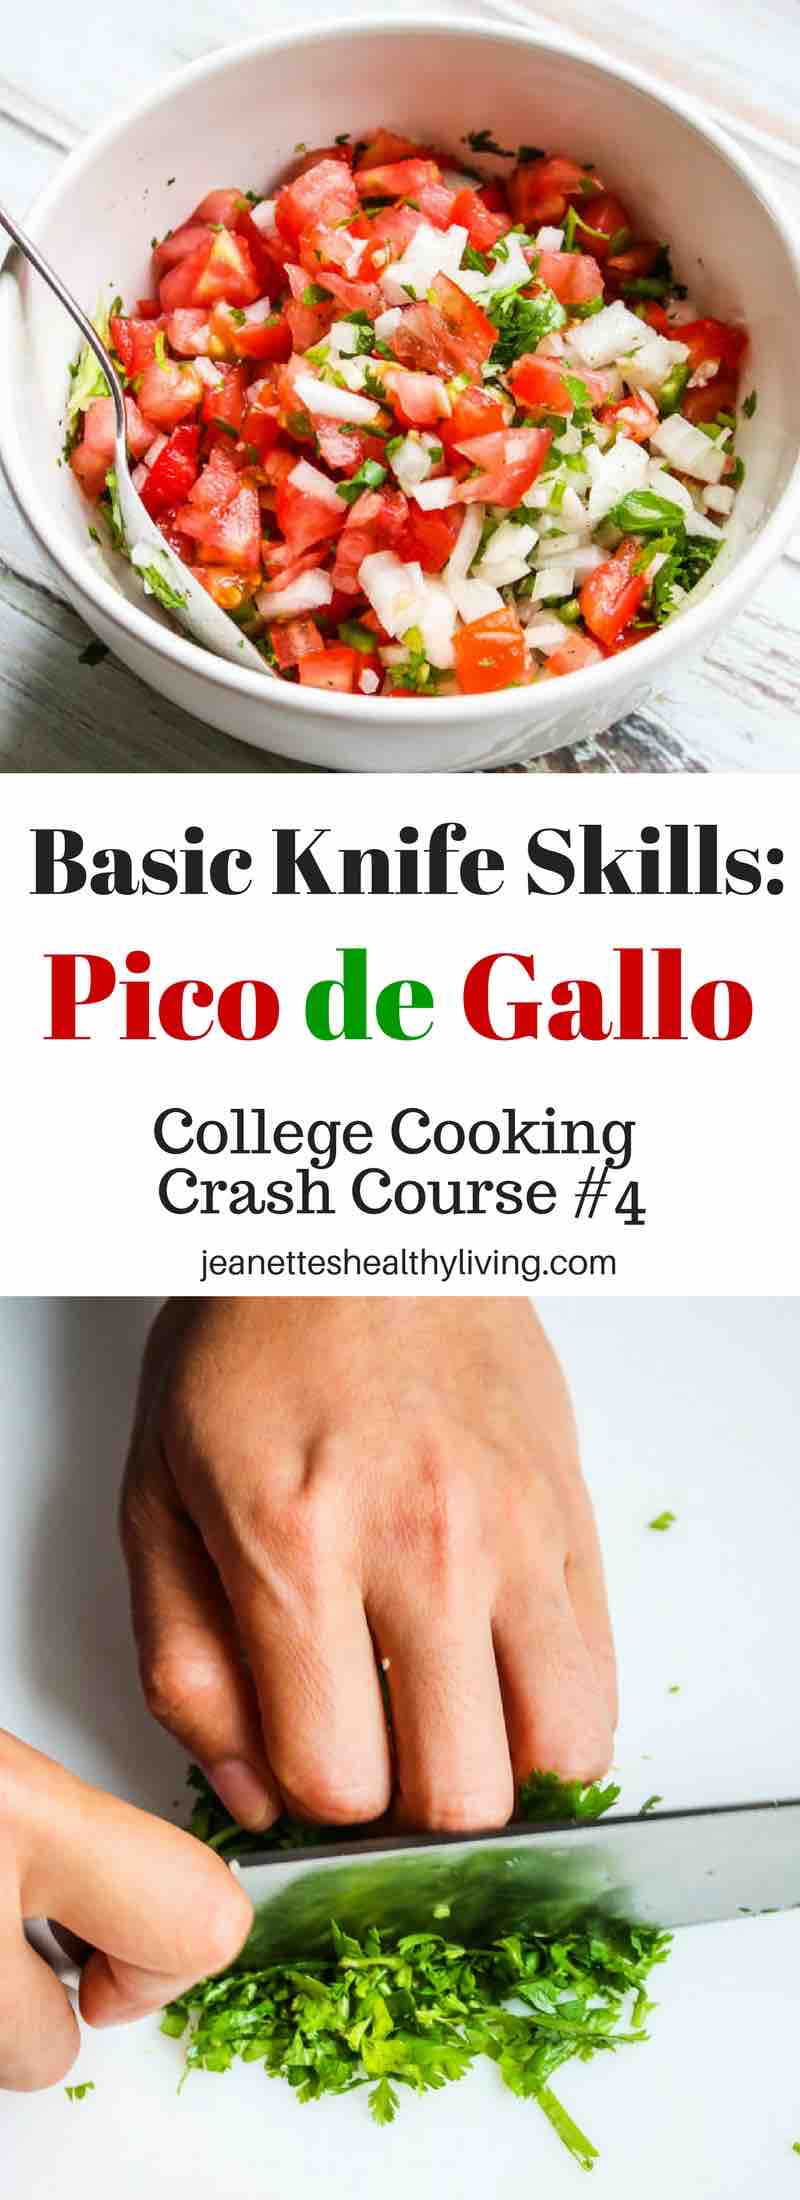 Pico de Gallo - learn basic knife skills: chopping, slicing, dicing, mincing